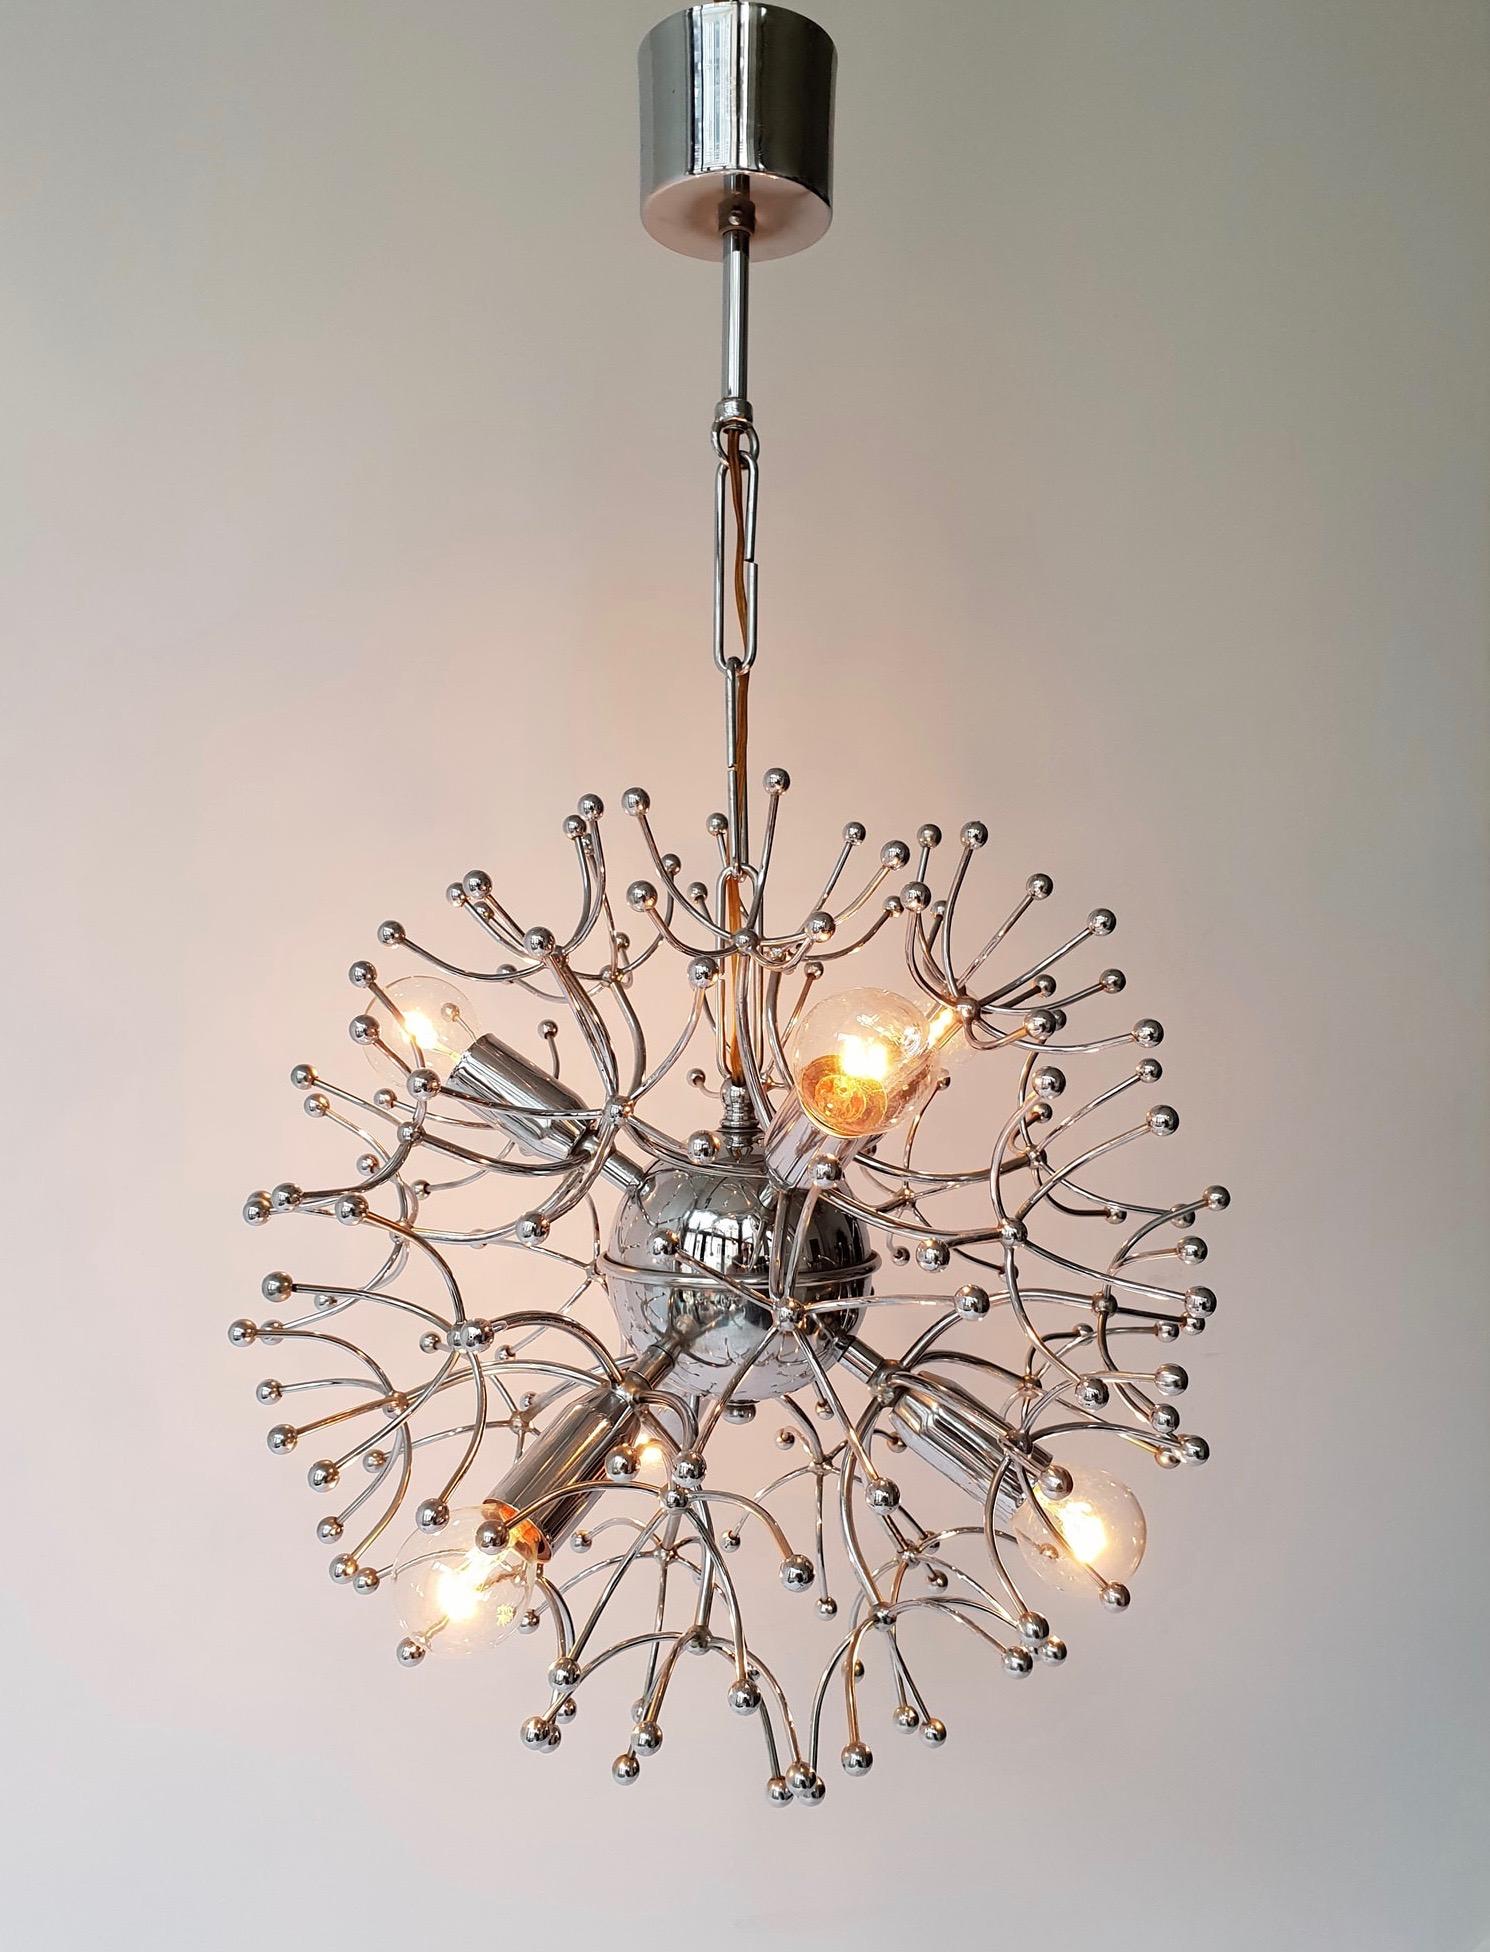 Italian midcentury chrome Sputnik chandelier by Sciolari.
Six light sockets/E14 fitting.
Measures: Diameter 38 cm.
Height 75 cm.